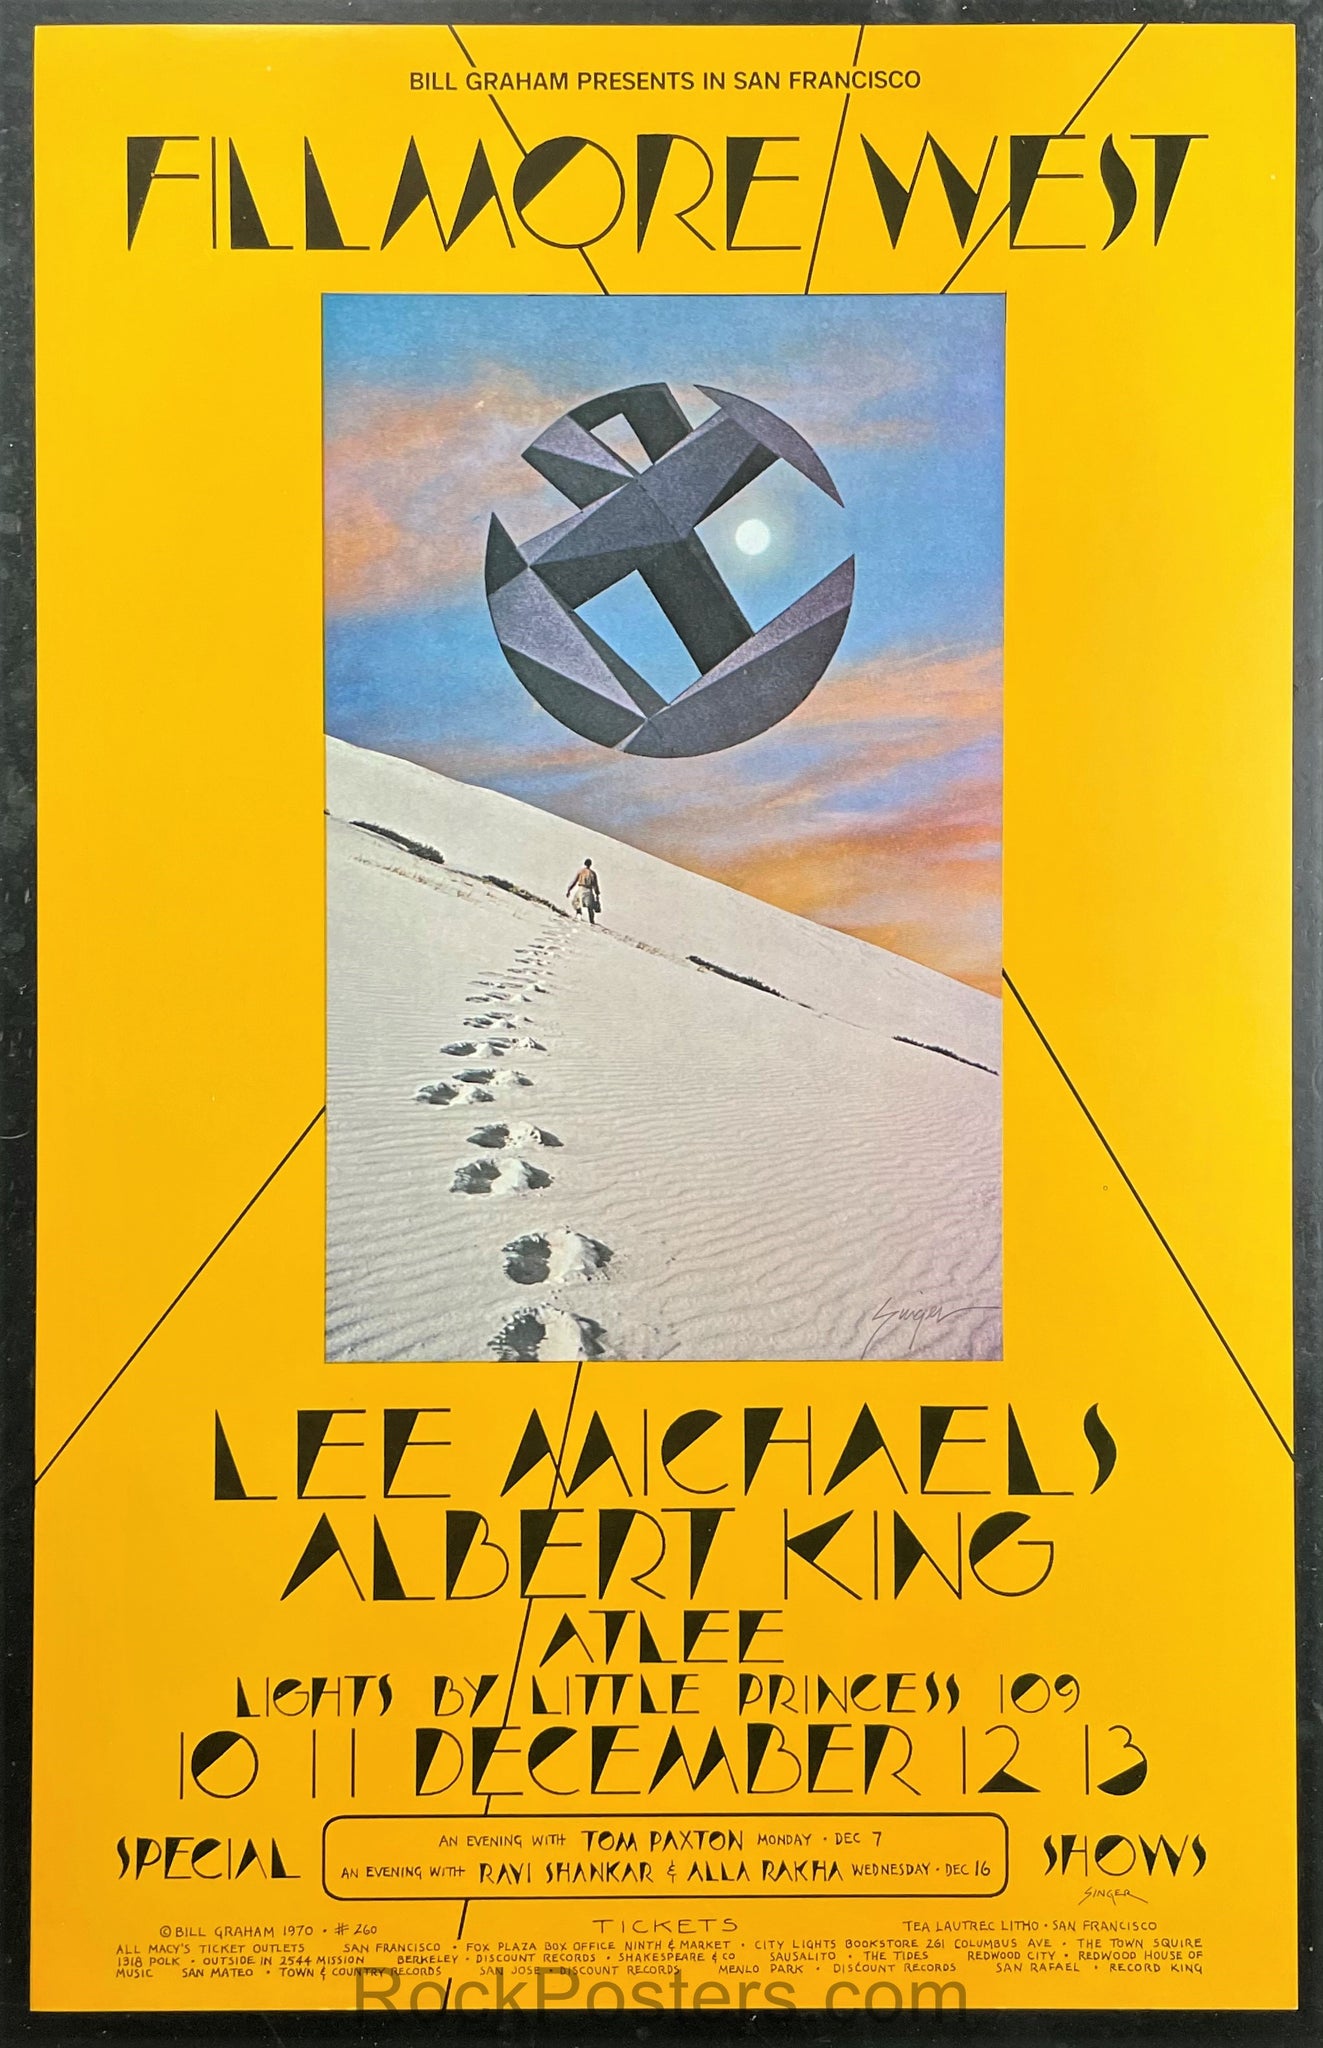 BG-260 - Lee Michaels - 1970 Poster - David Singer Signed - Fillmore West - Near Mint Minus